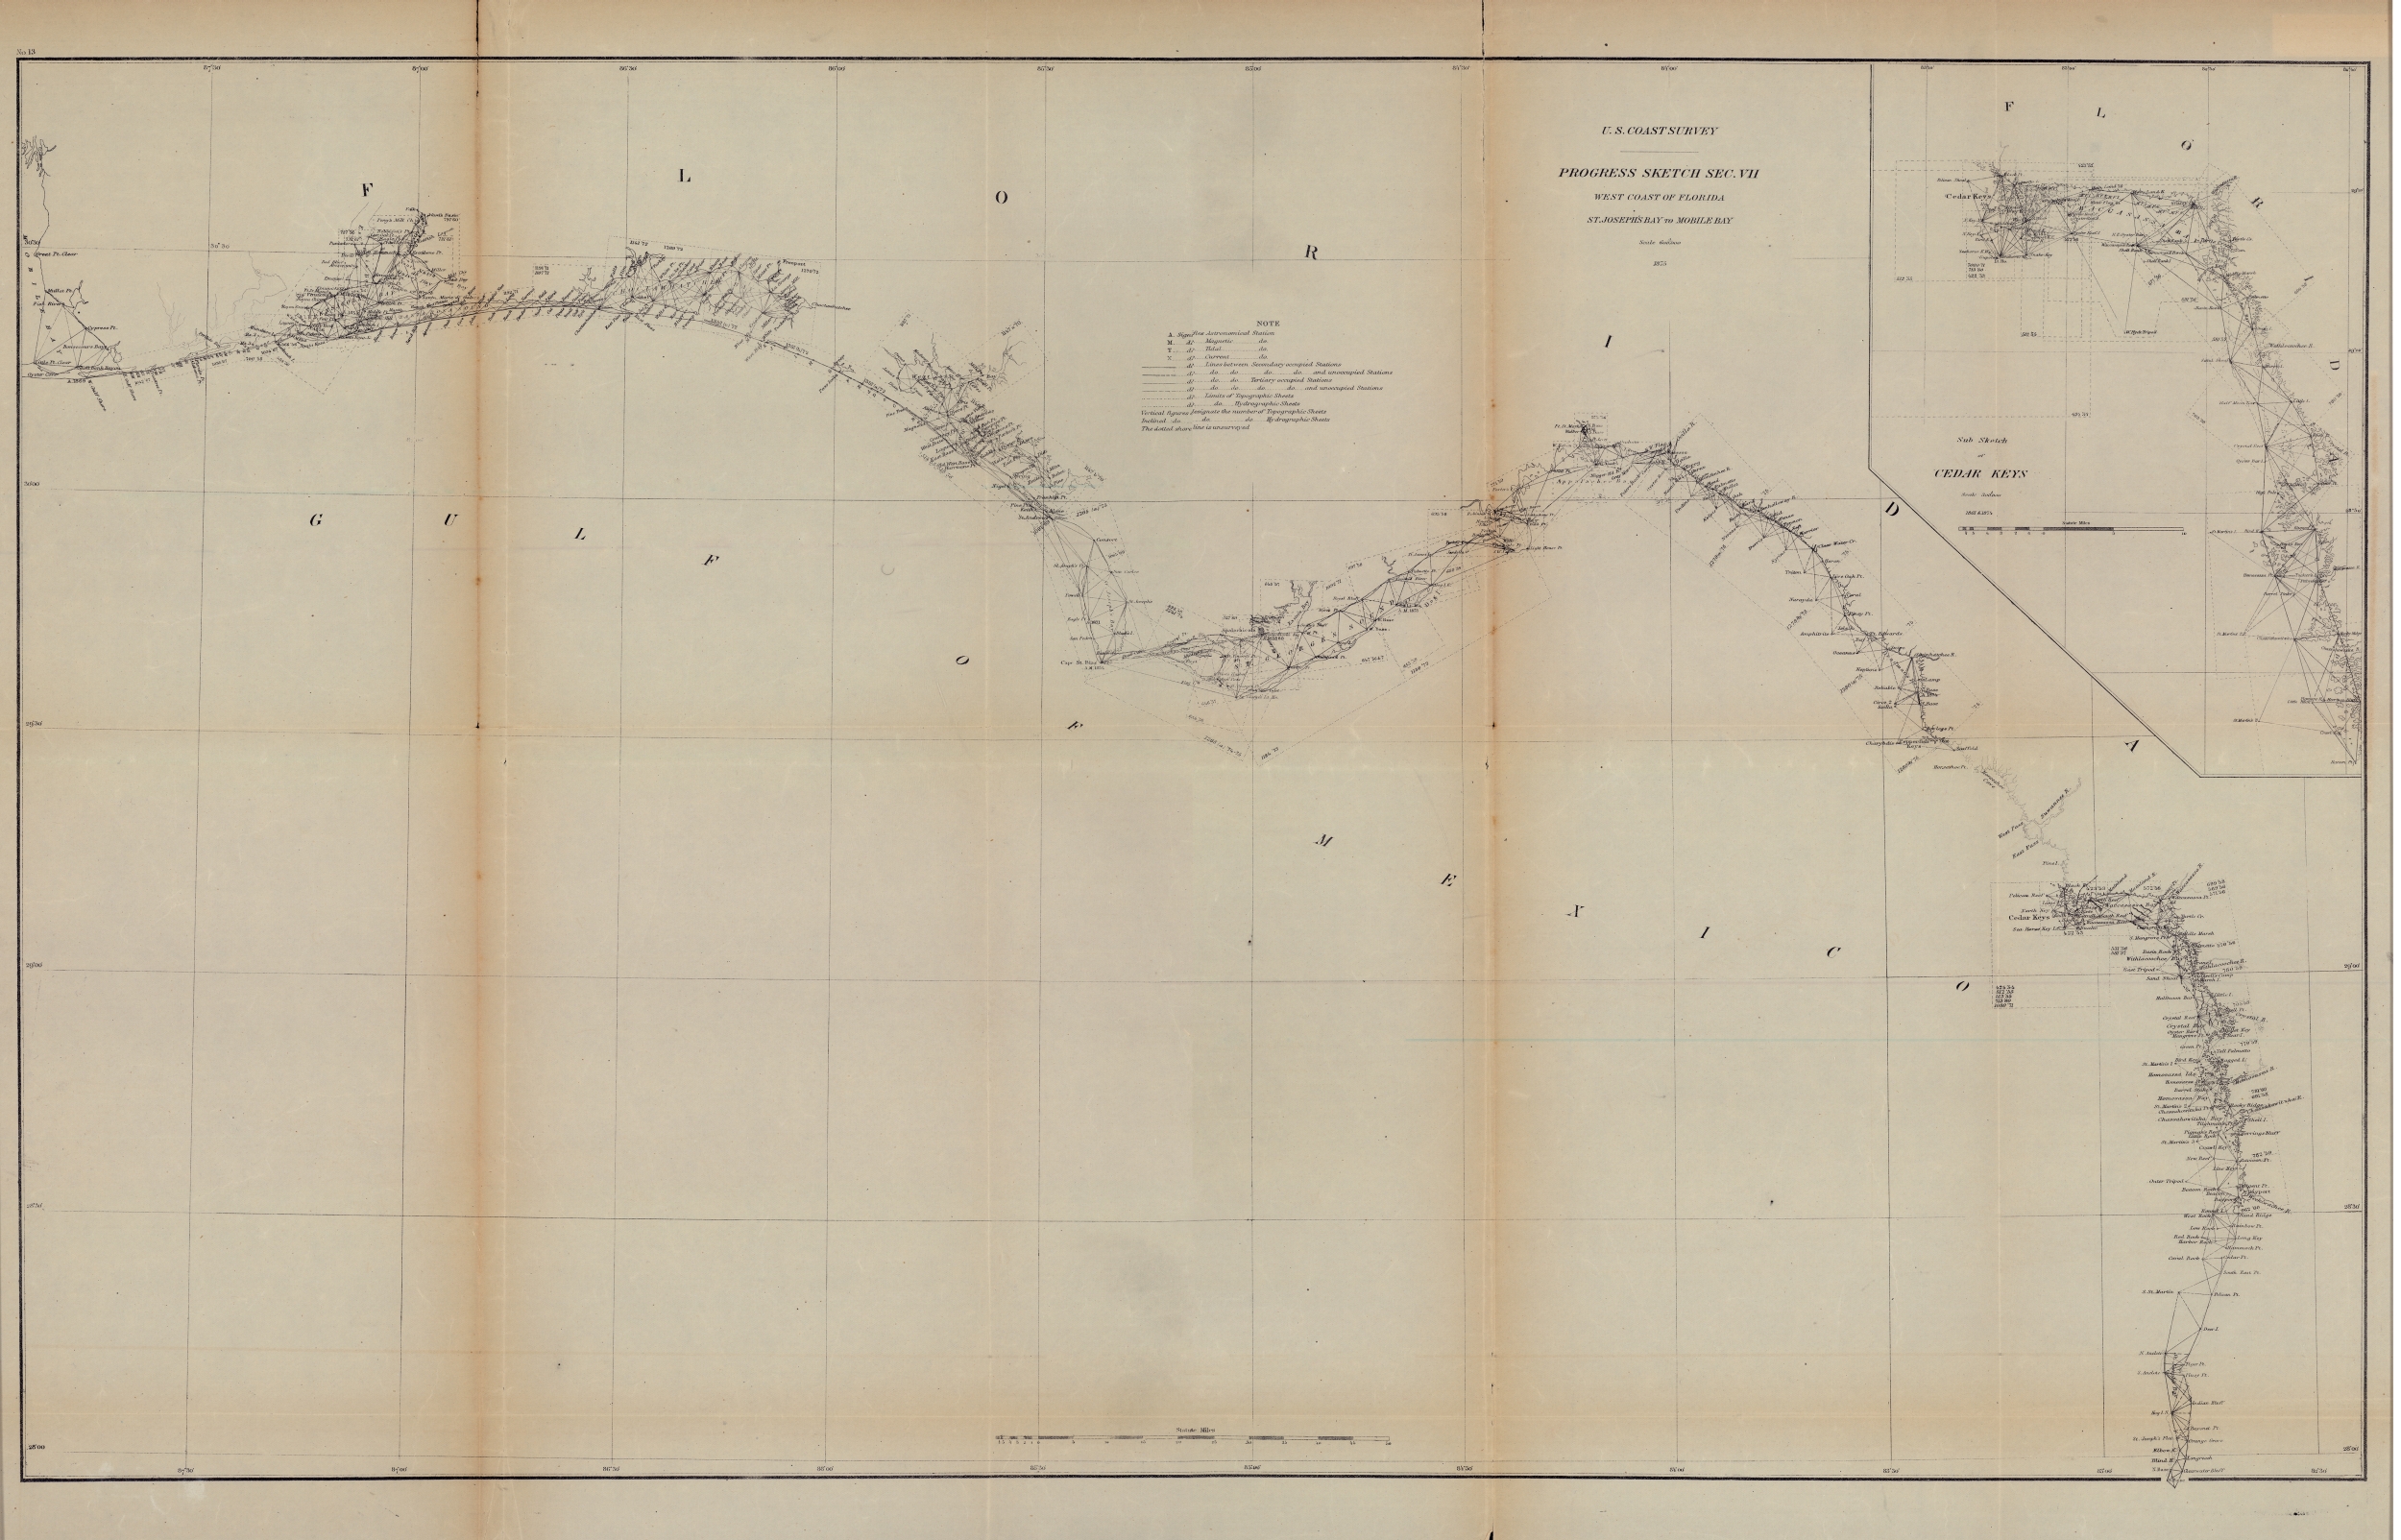 Map of East Coast of Florida from Amelia Island to Anastasia Island, 1871